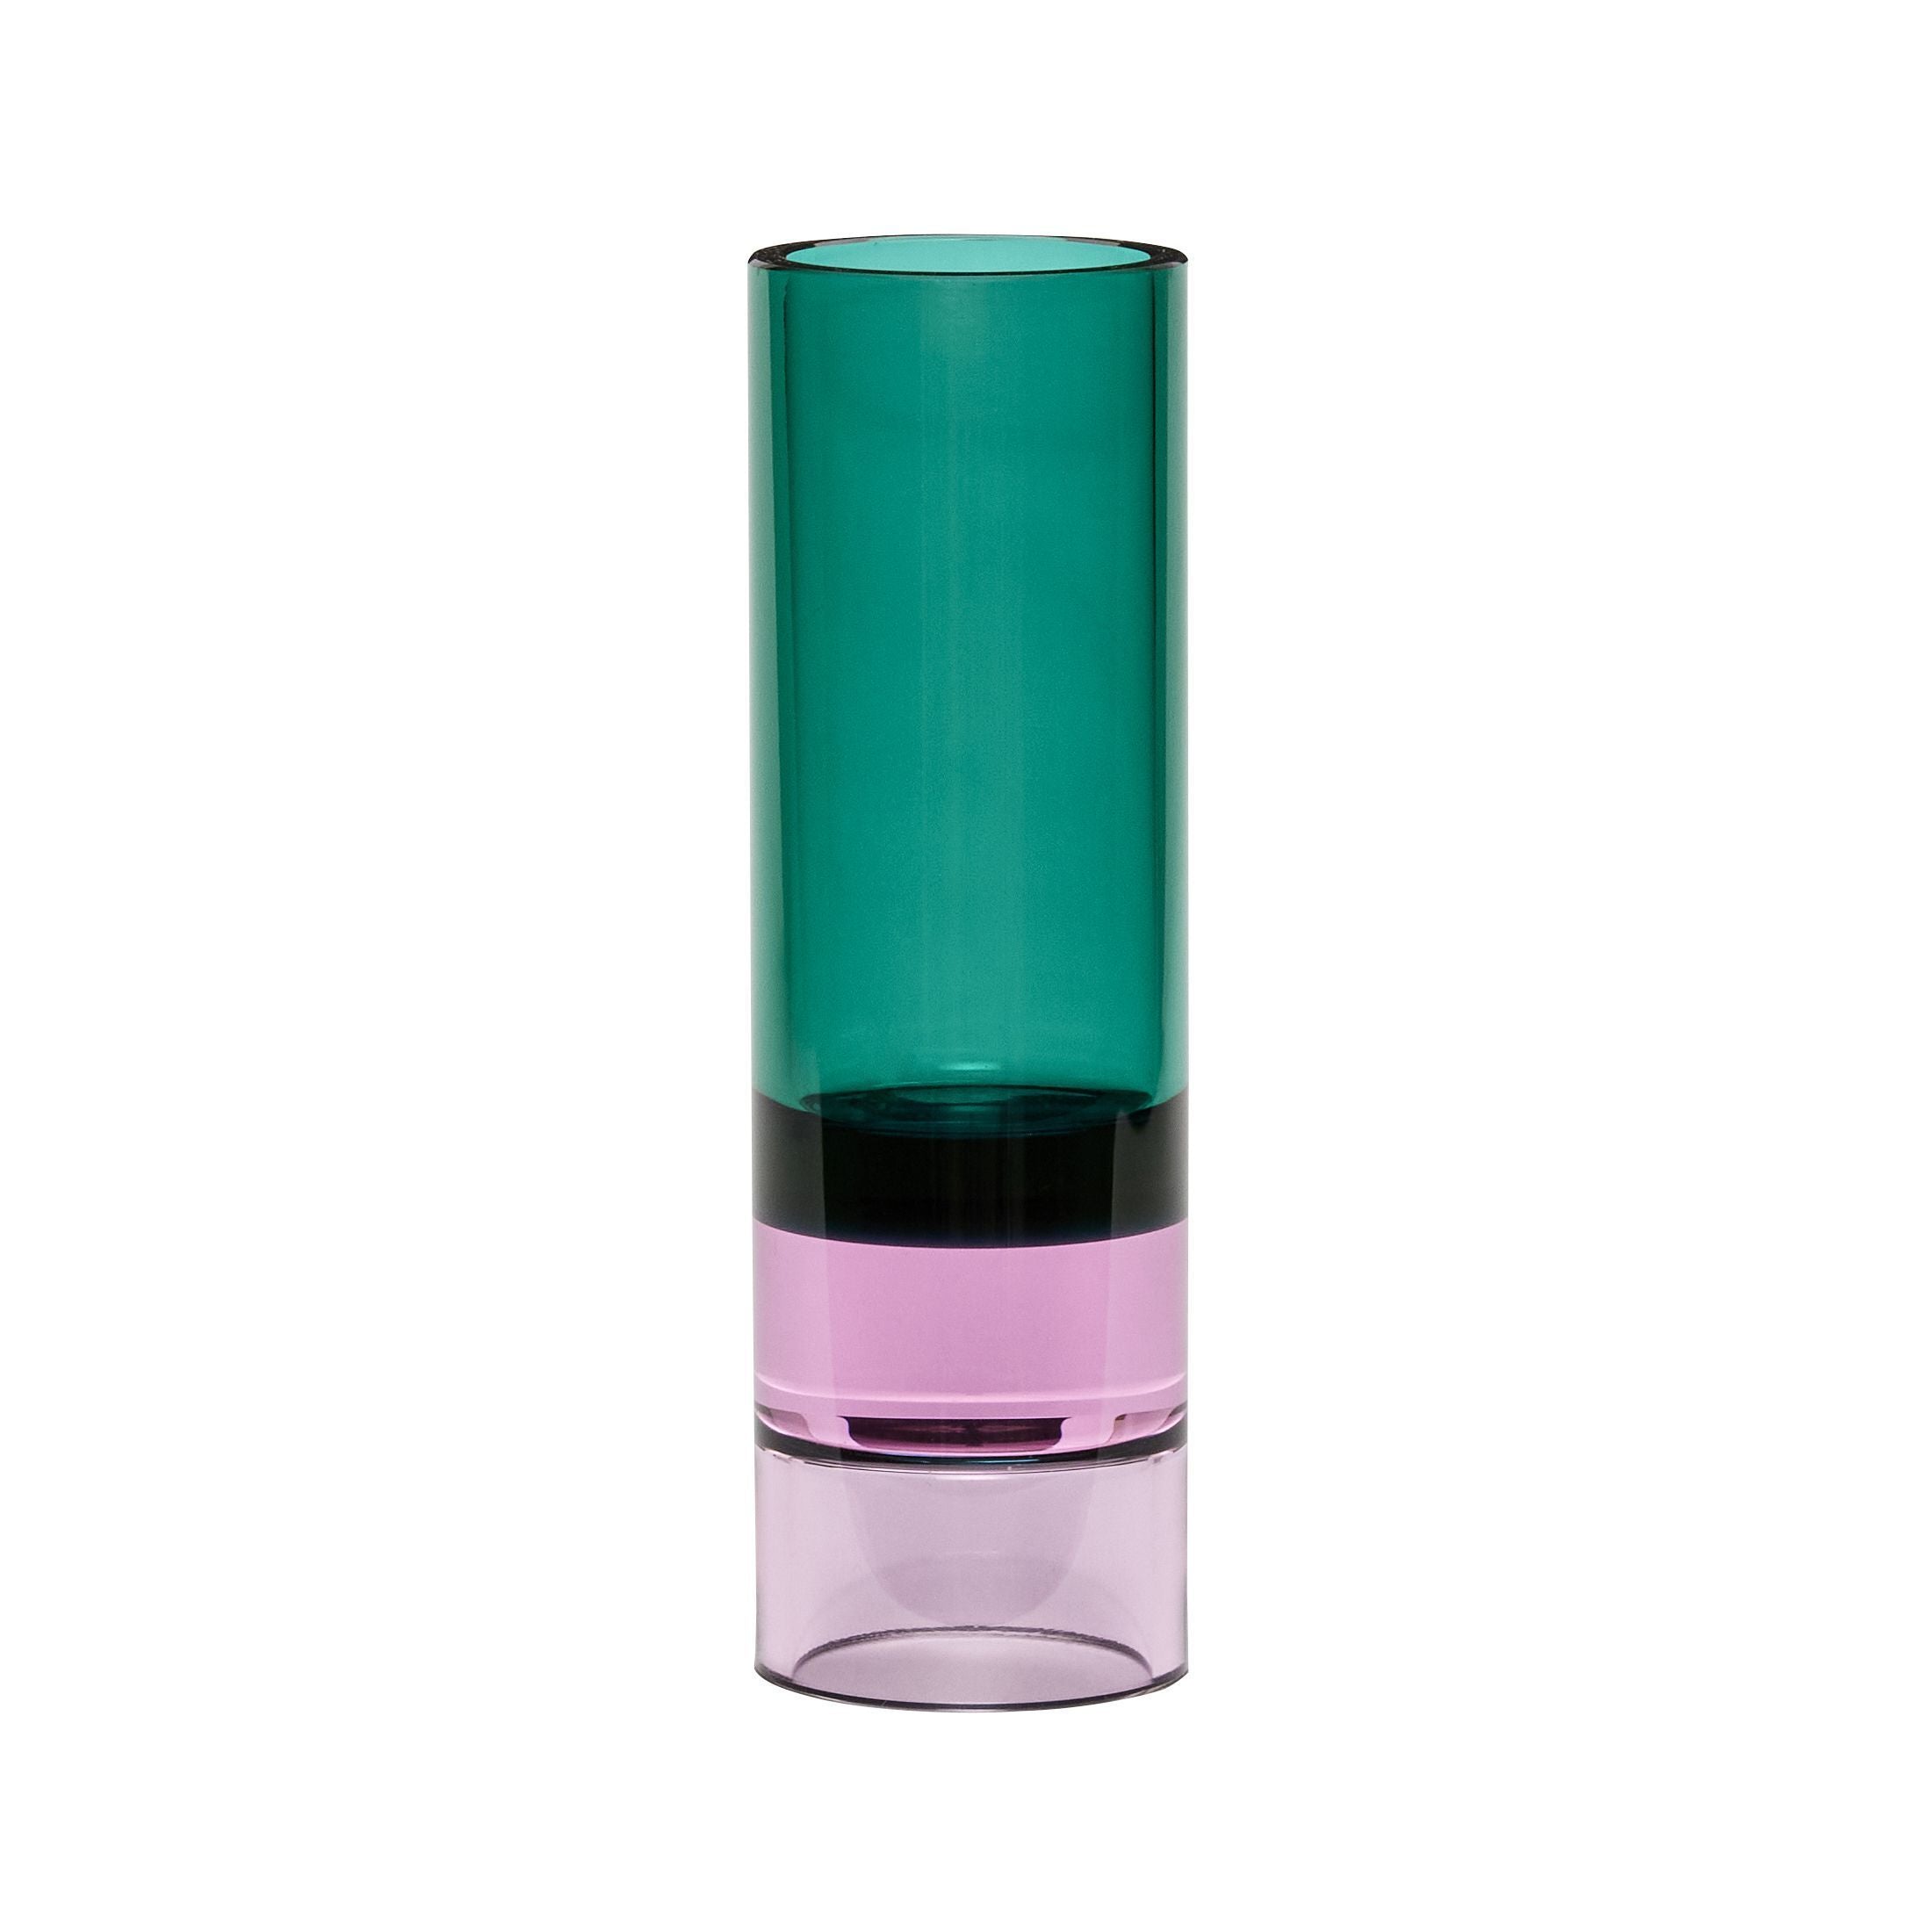 Hübsch Astro Teelight Halter Kristall, grün/rosa